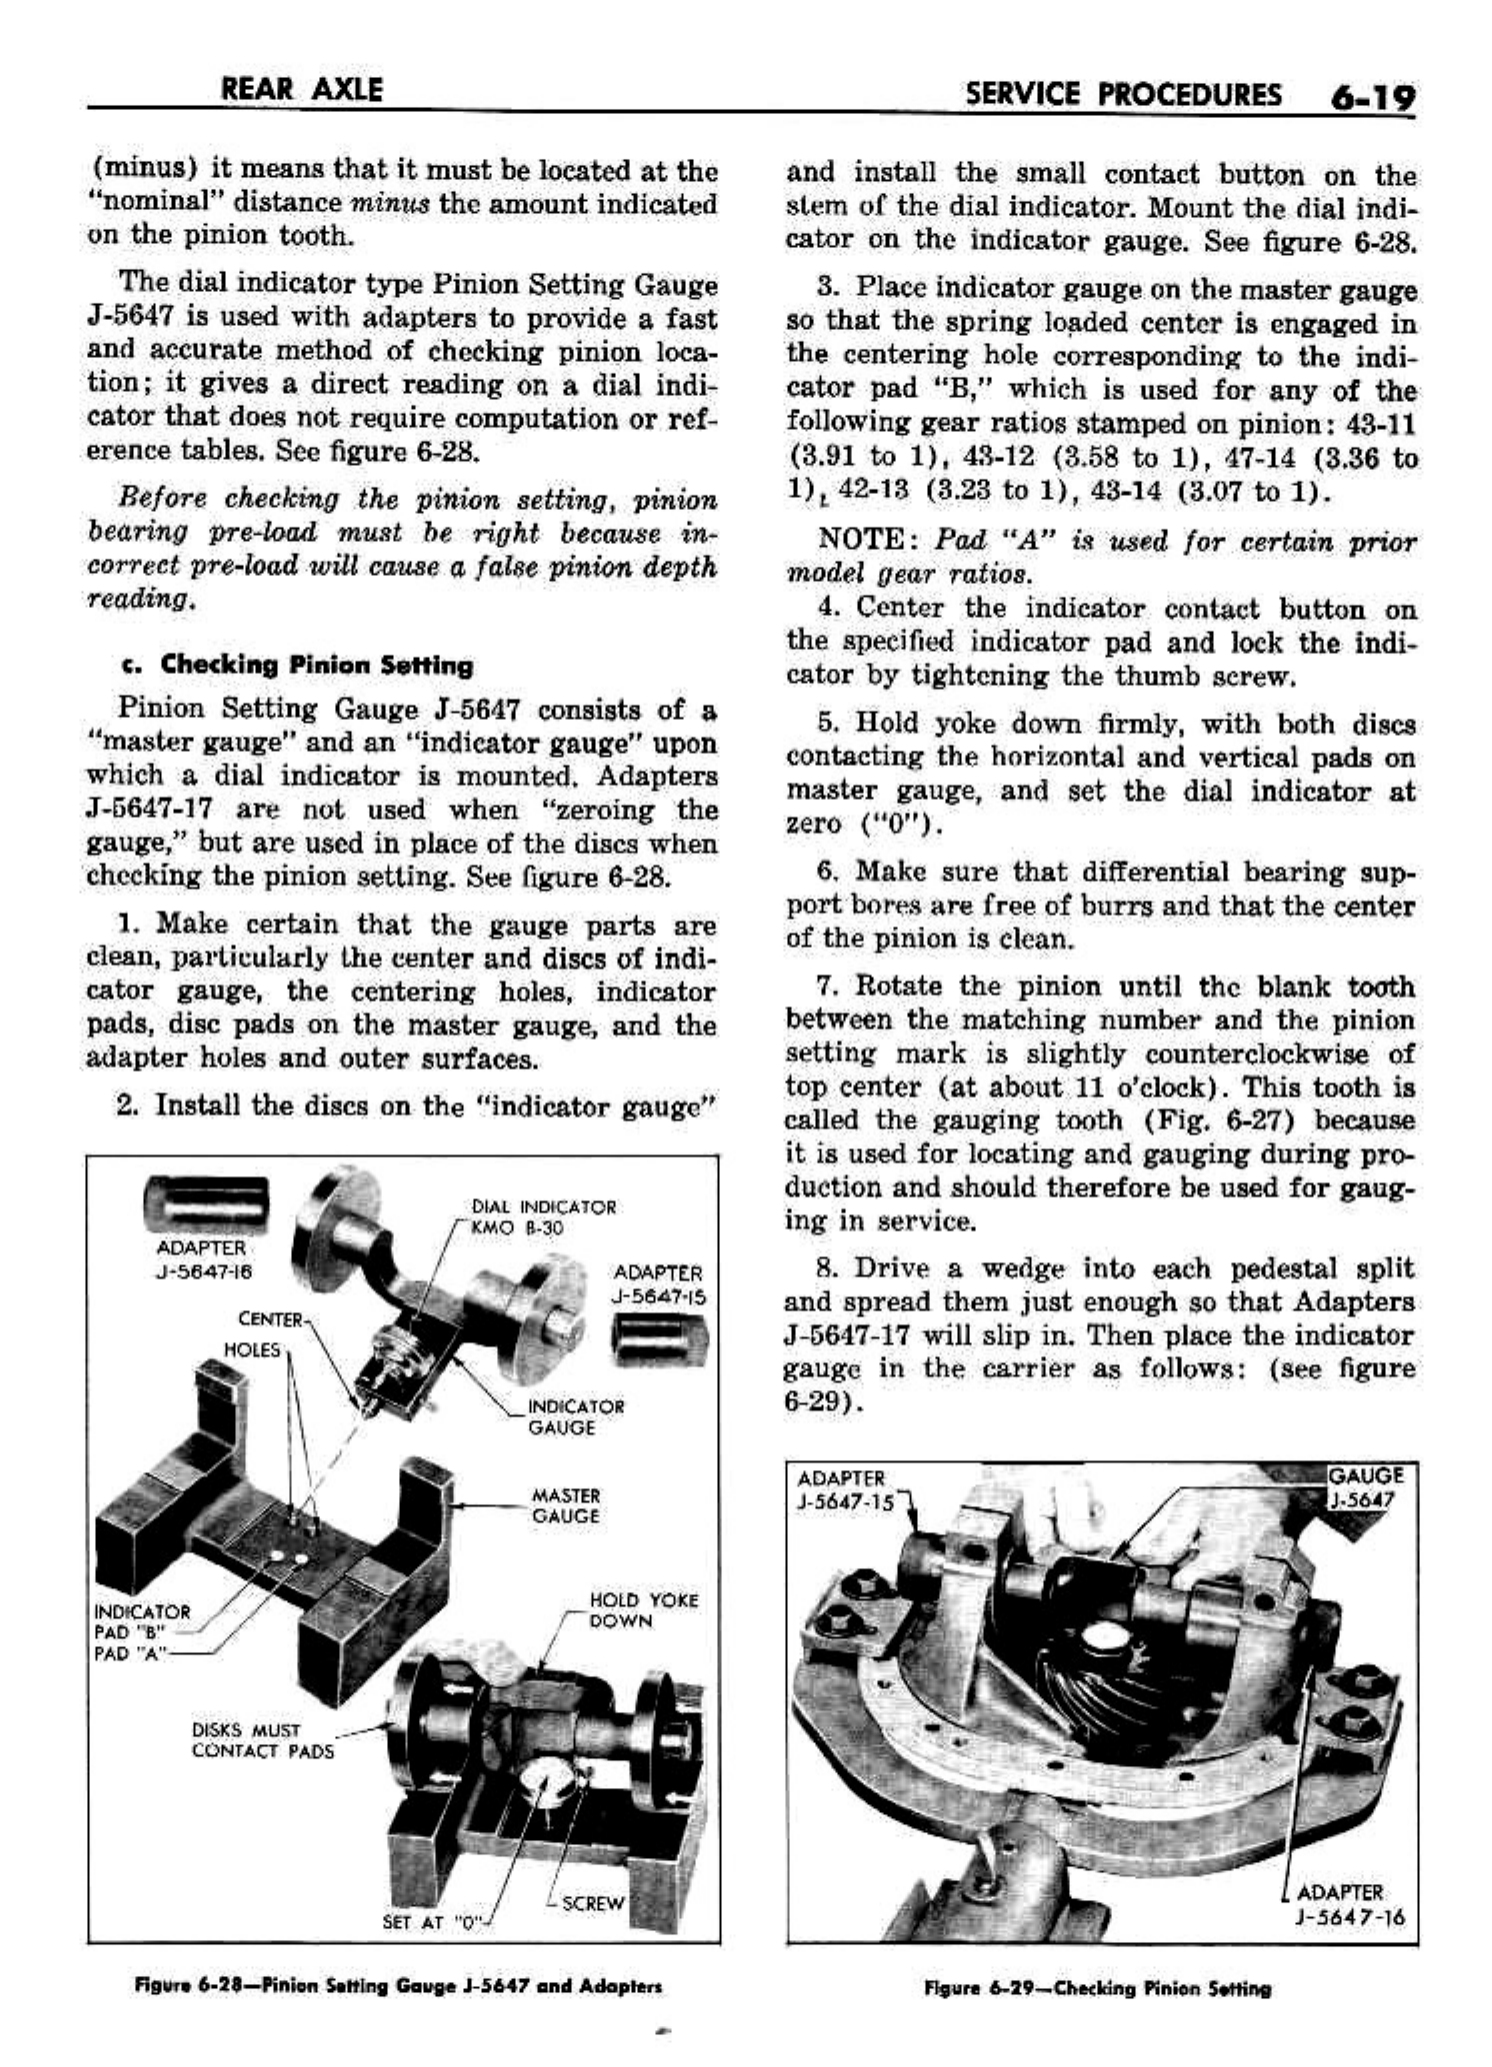 n_07 1958 Buick Shop Manual - Rear Axle_19.jpg